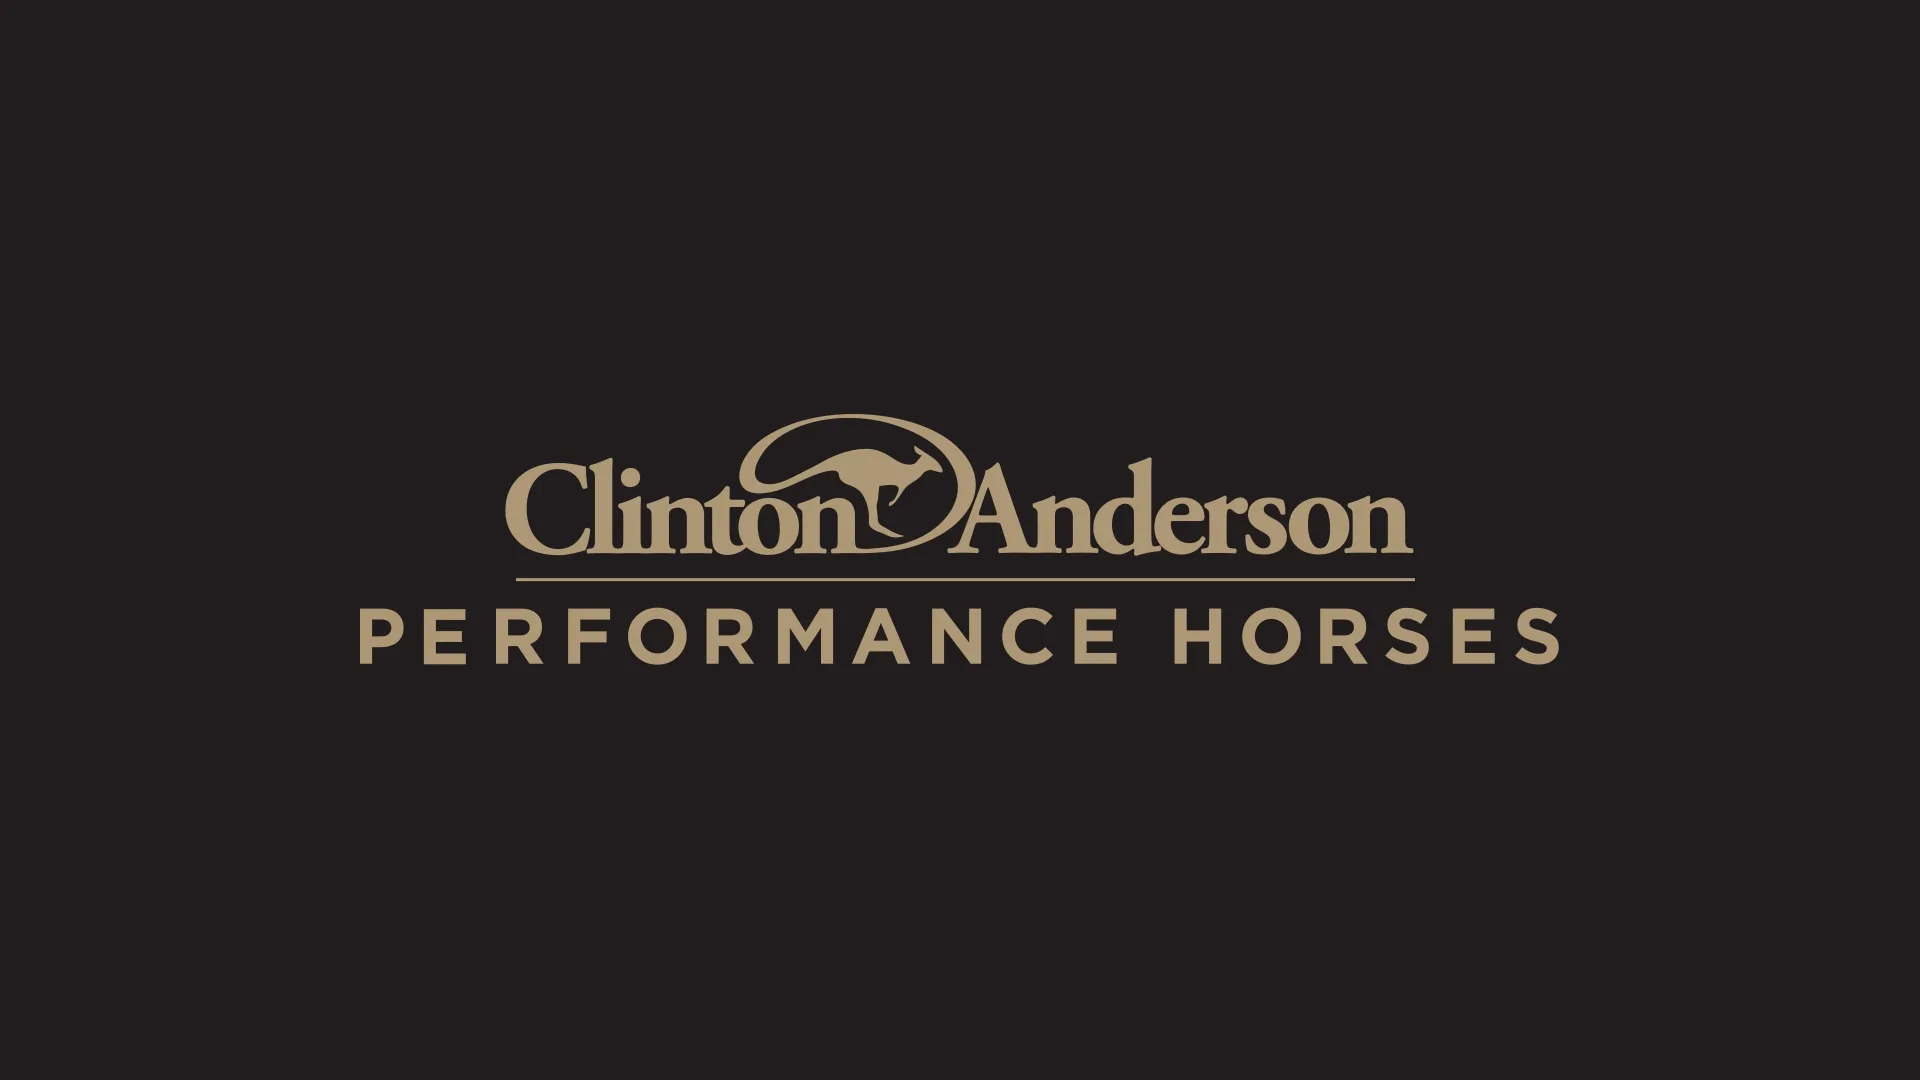 Clinton Anderson performance horses - logo design, branding